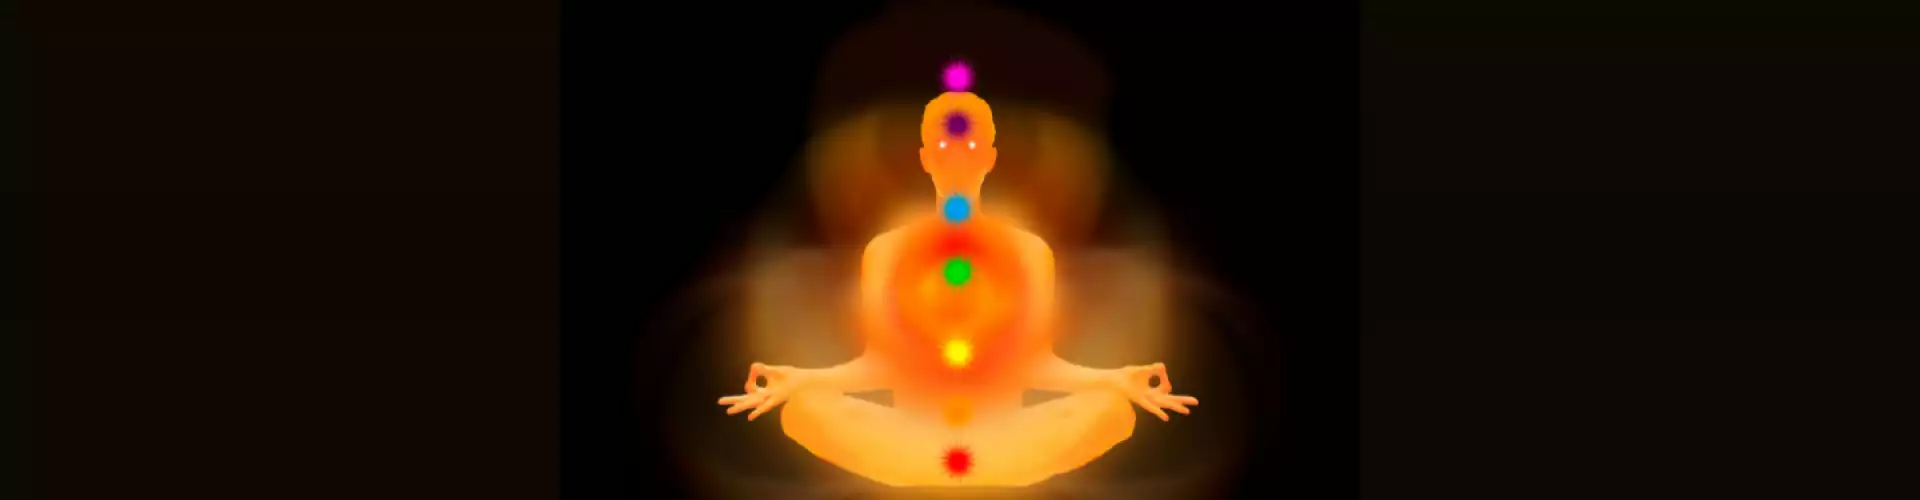 Yoga Prānāyāma para abrir el chakra del entrecejo